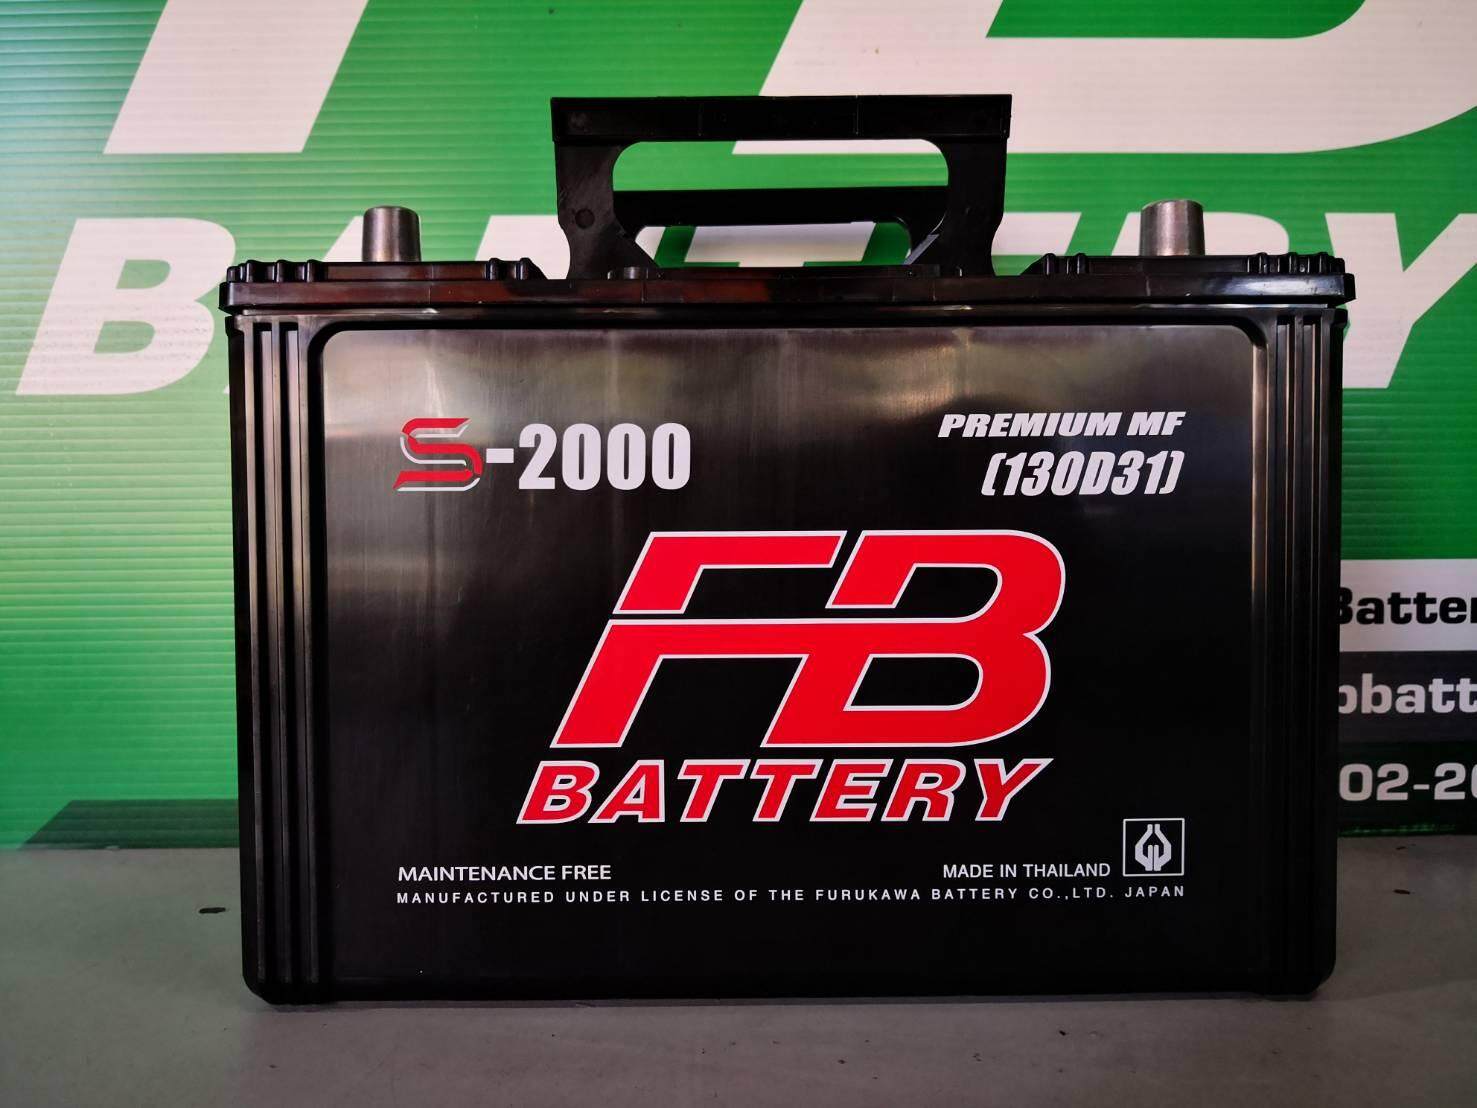 FB แบตเตอรี่ 12V100แอมป์ รุ่น S-2000L 130D31L-MF (800CCA) ยาว30.4ซม.กว้าง17.1ซม.ขั้ว L ซ้าย แกะกล่องใช้ได้เลย เป็นแบตระบบกึ่งแห้ง รับประกันโดย Siam Battery